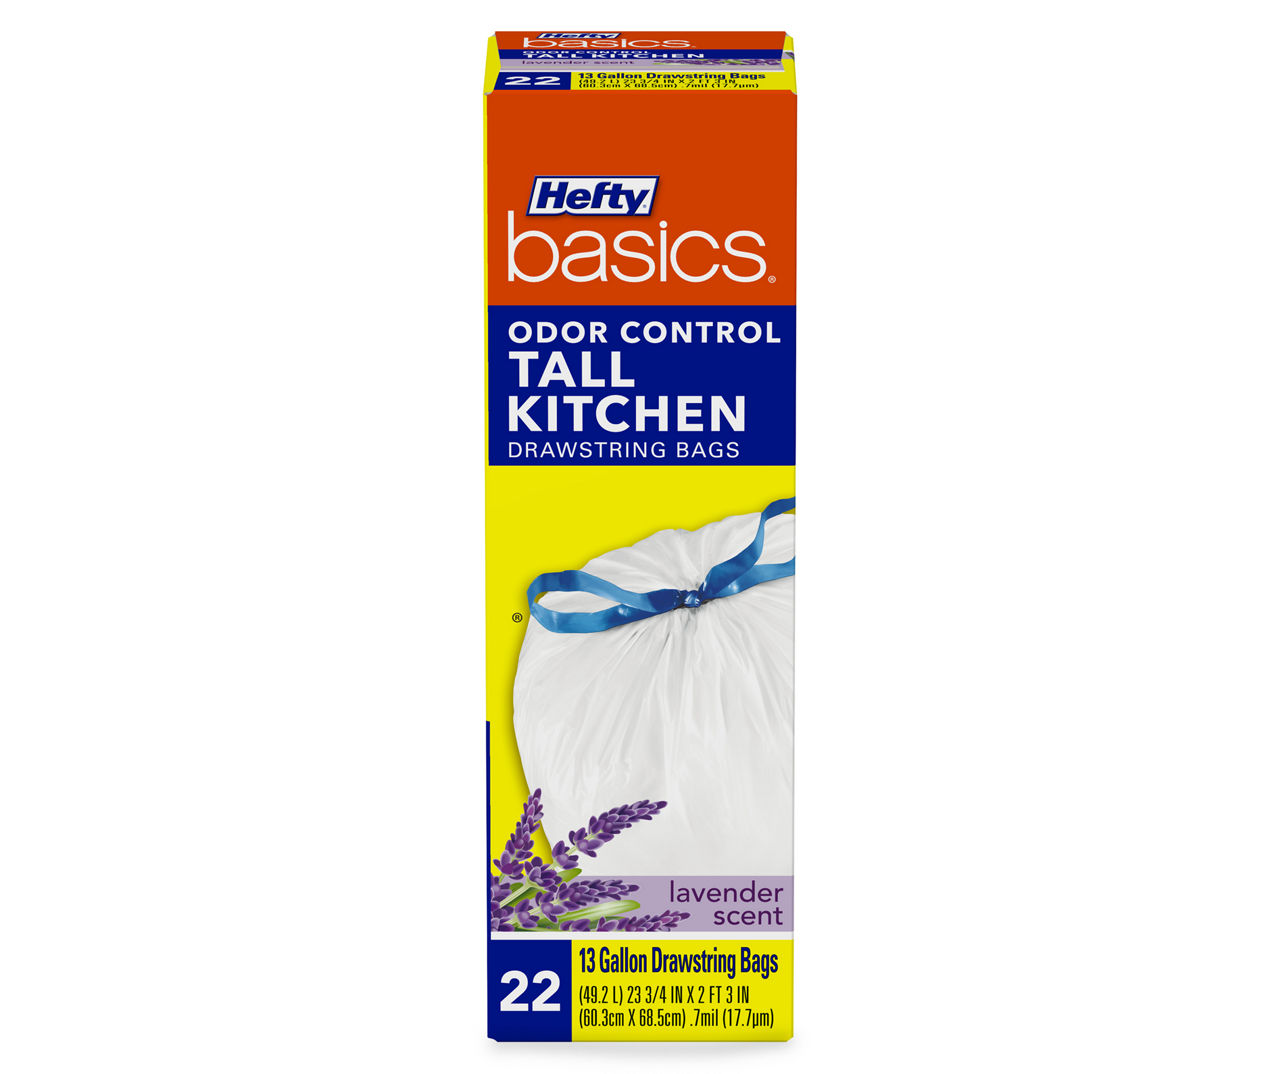 Hefty Basics Odor Control 13 Gallon Tall Kitchen Drawstring Bags 22 ct Lavender Scent Box